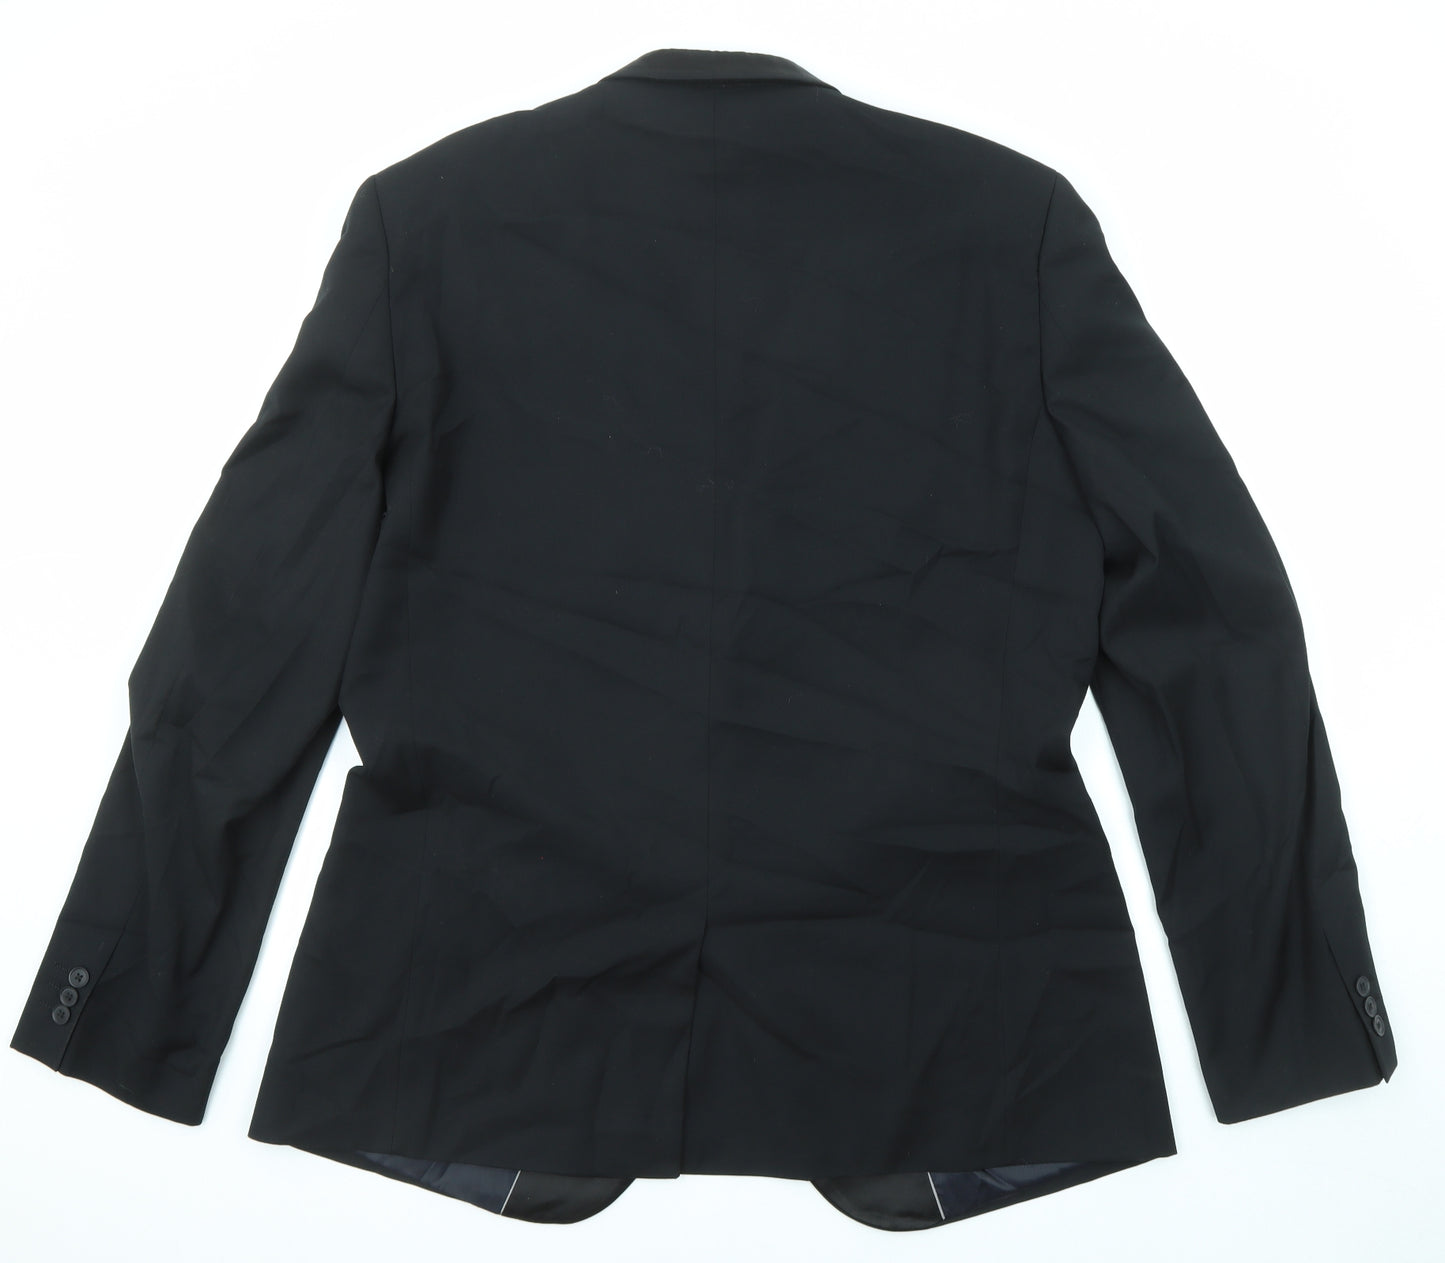 NEXT Mens Black Polyester Tuxedo Suit Jacket Size 44 Regular